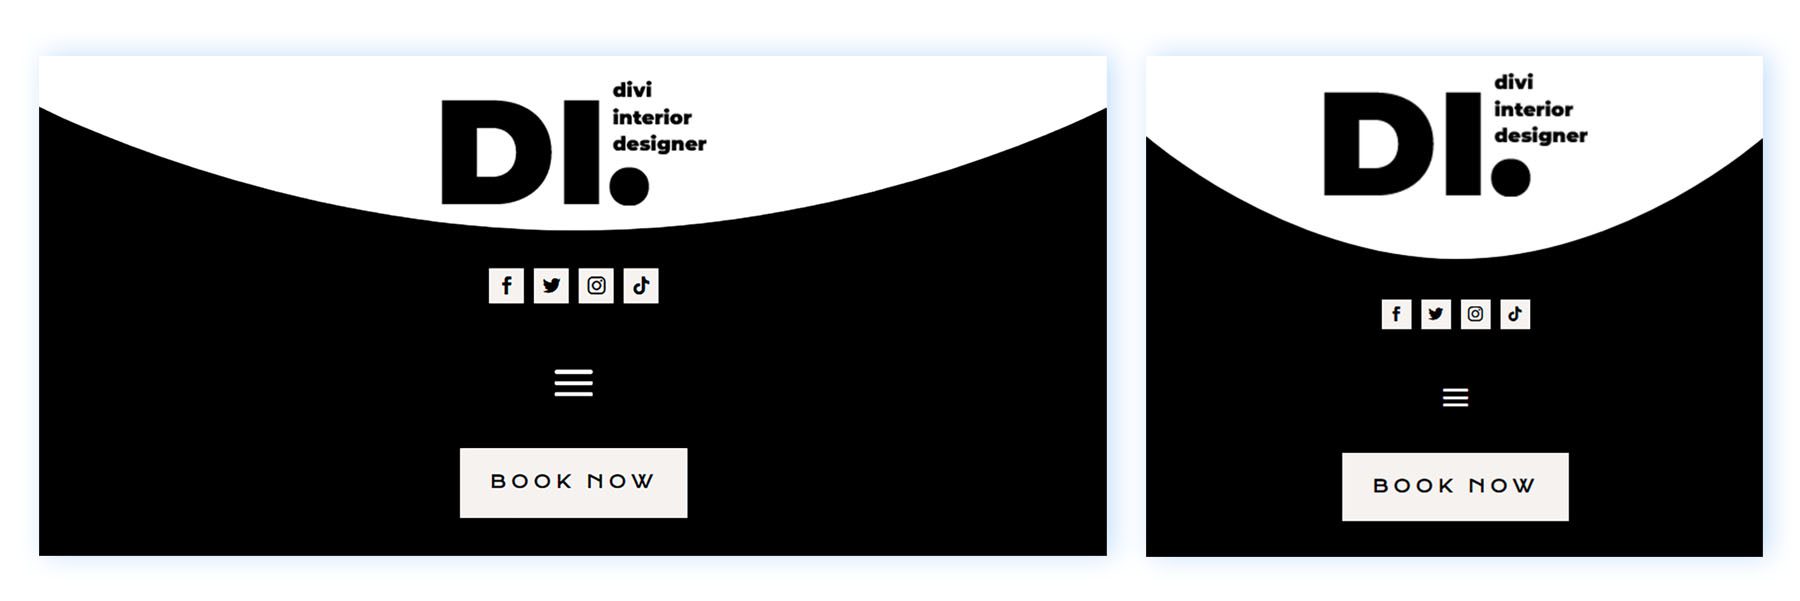 Tablet and mobile version of the Divi Interior Designer header layout